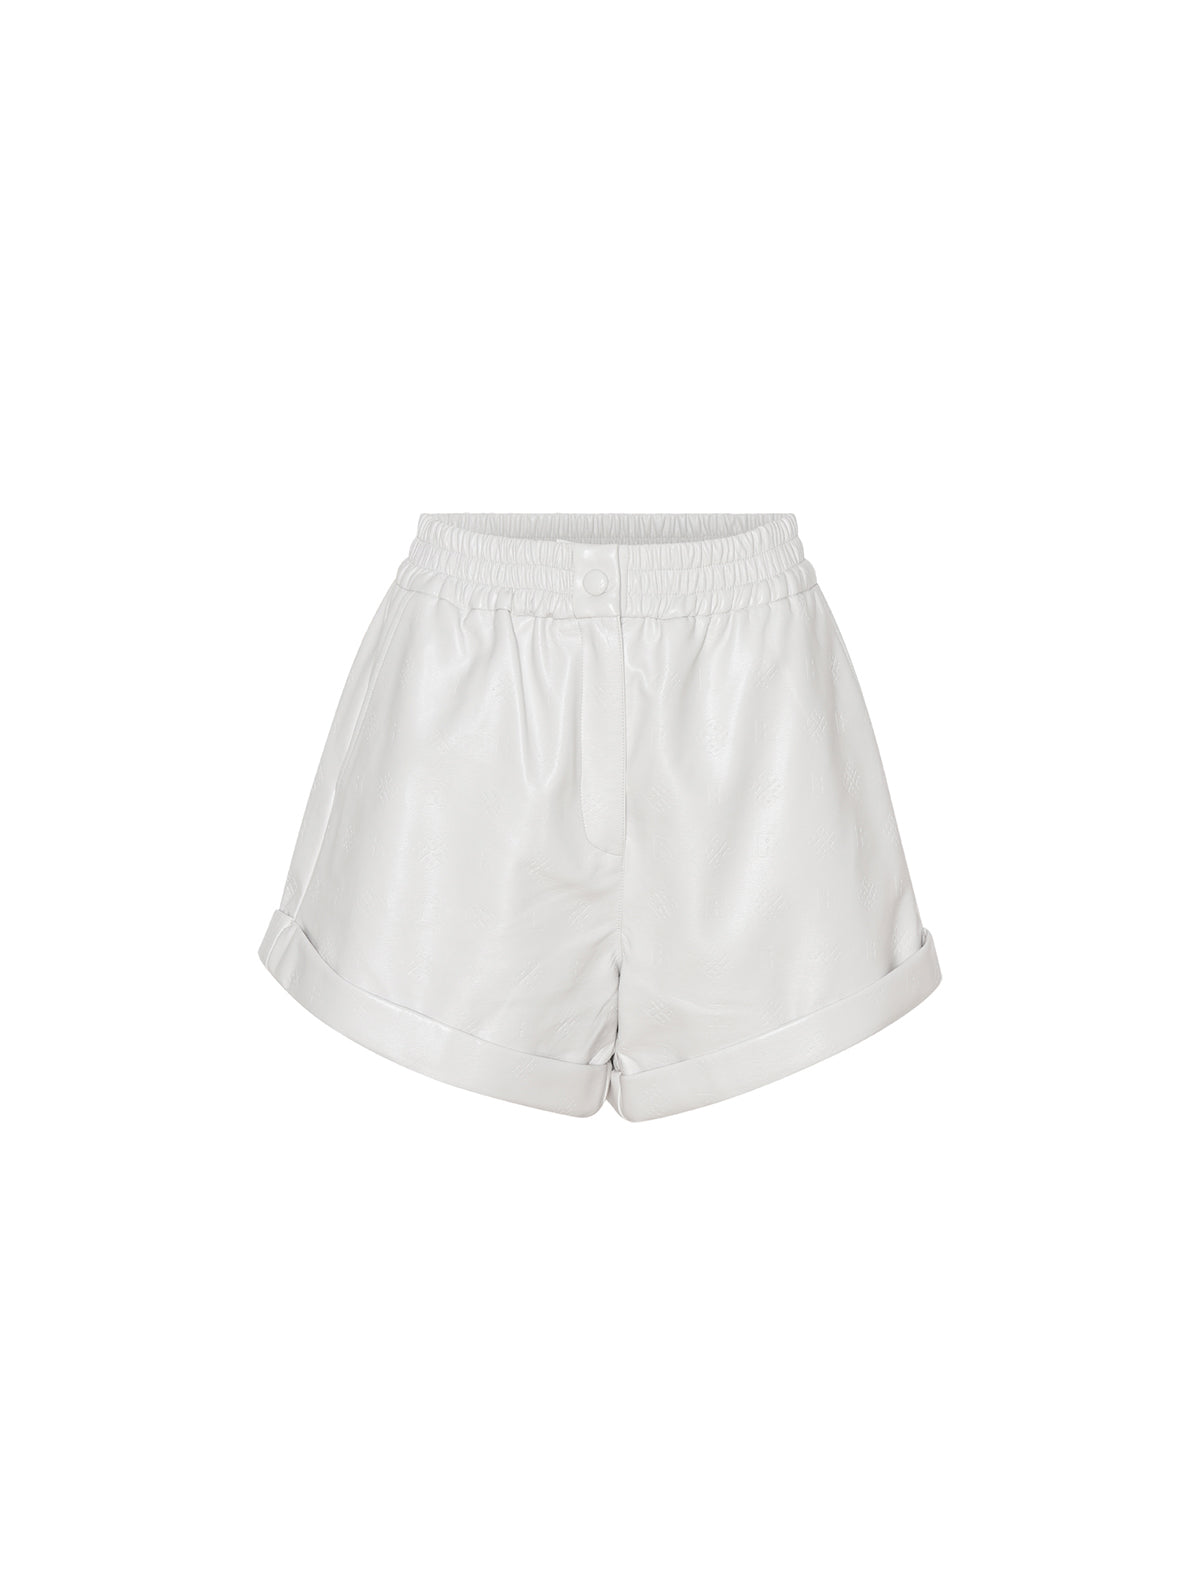 ROTATE Birger Christensen Belina Shorts in Bright White